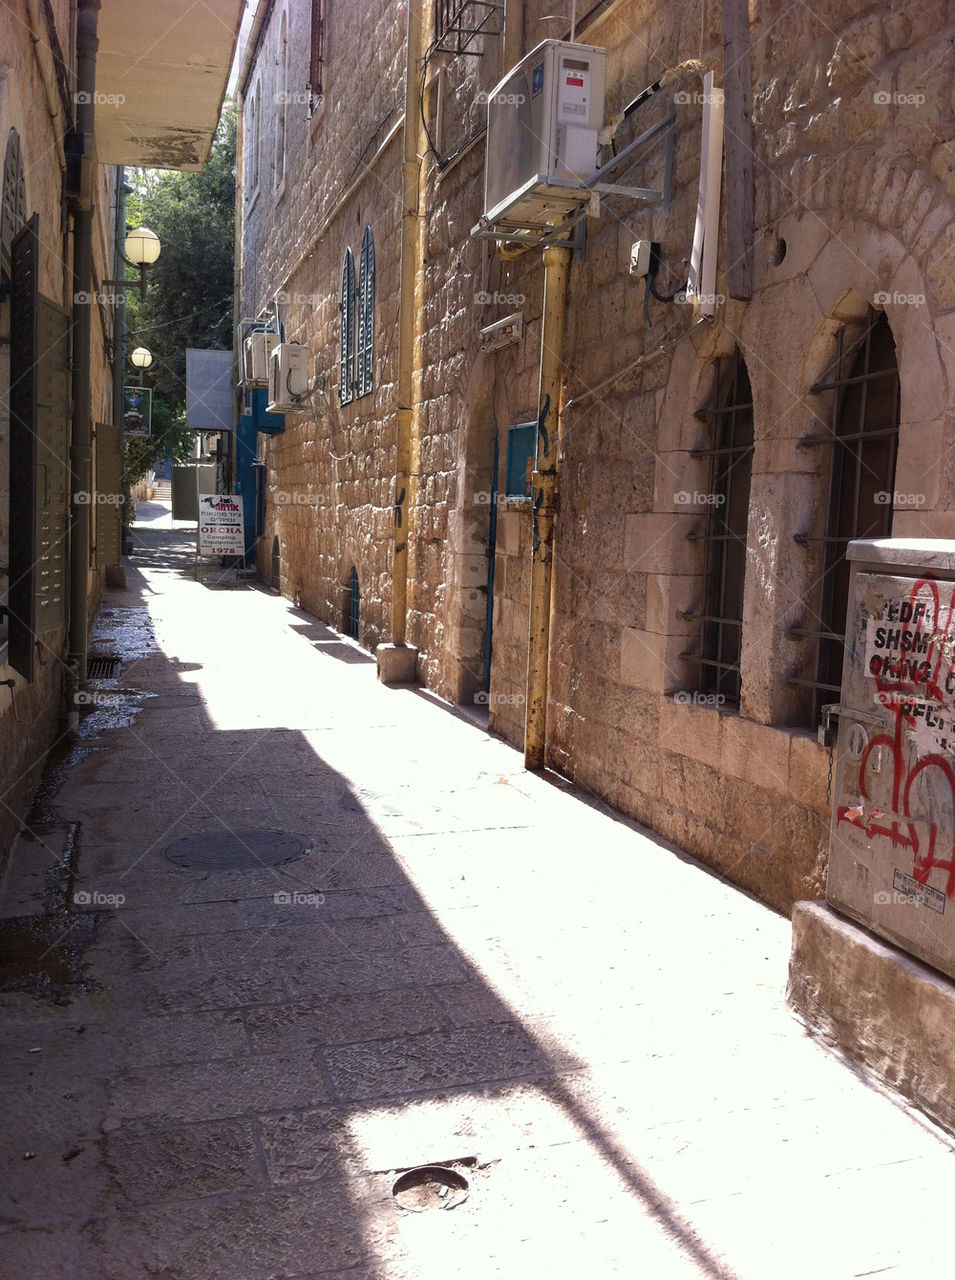 concrete hallway israel jerusalem by elad013